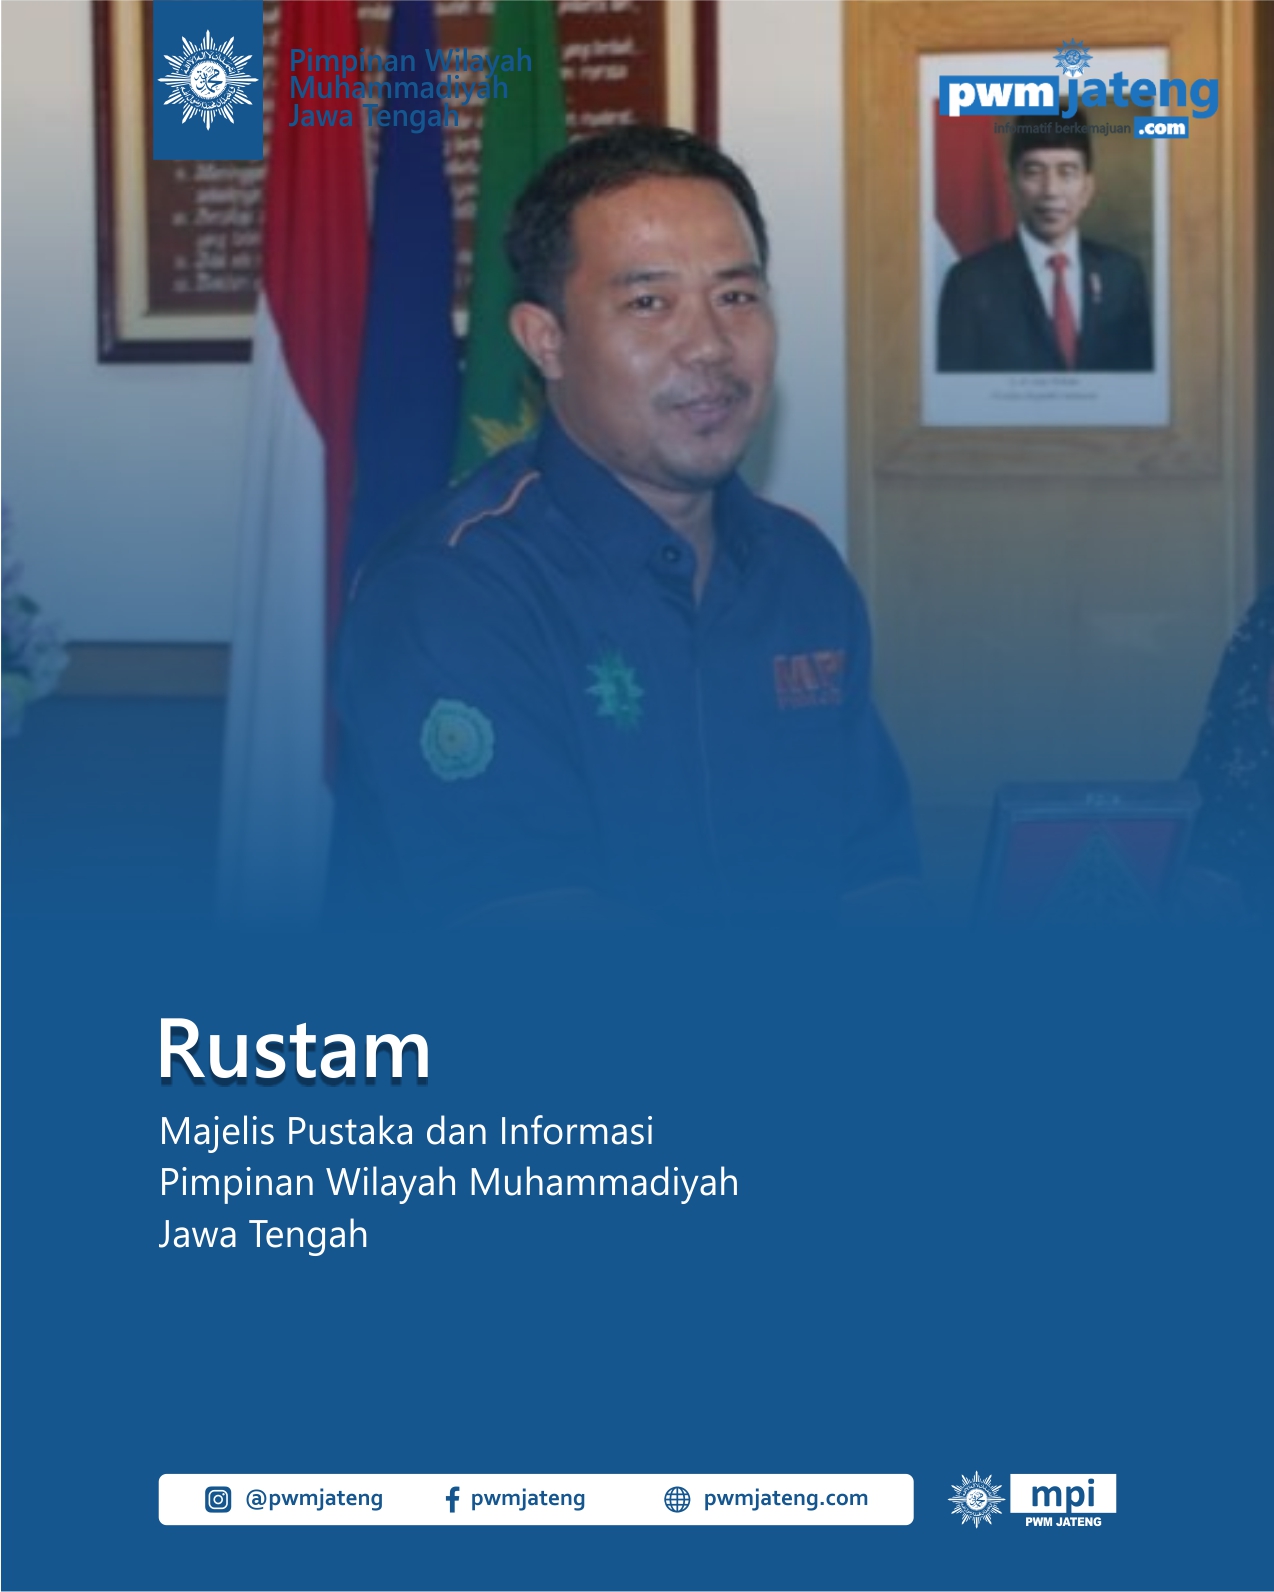 Rustam MPI Jateng